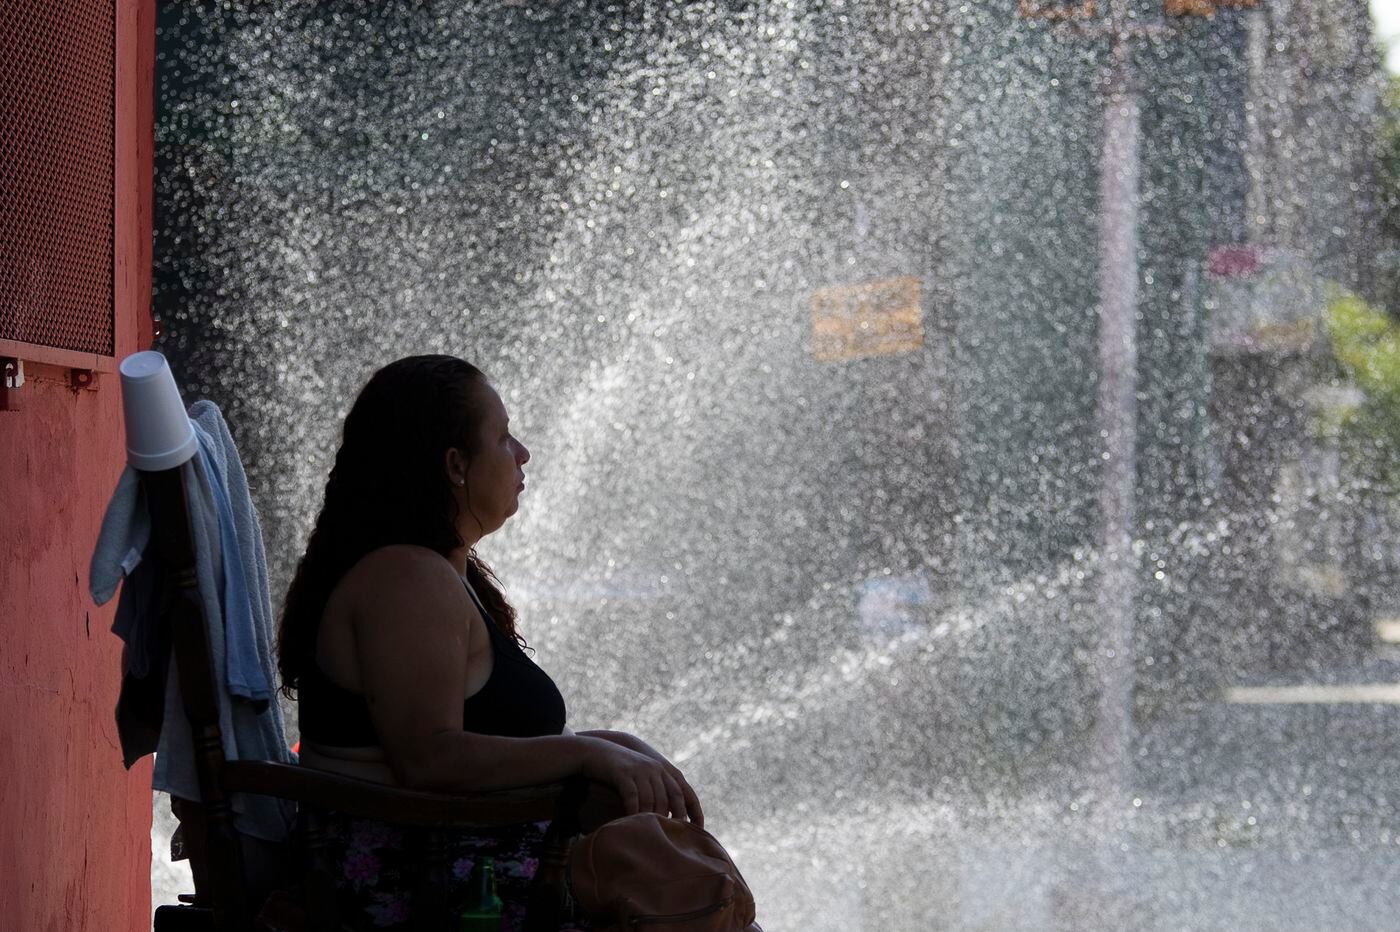 Philadelphia Weather Has Heat Wave On Tap 100 Degrees Possible